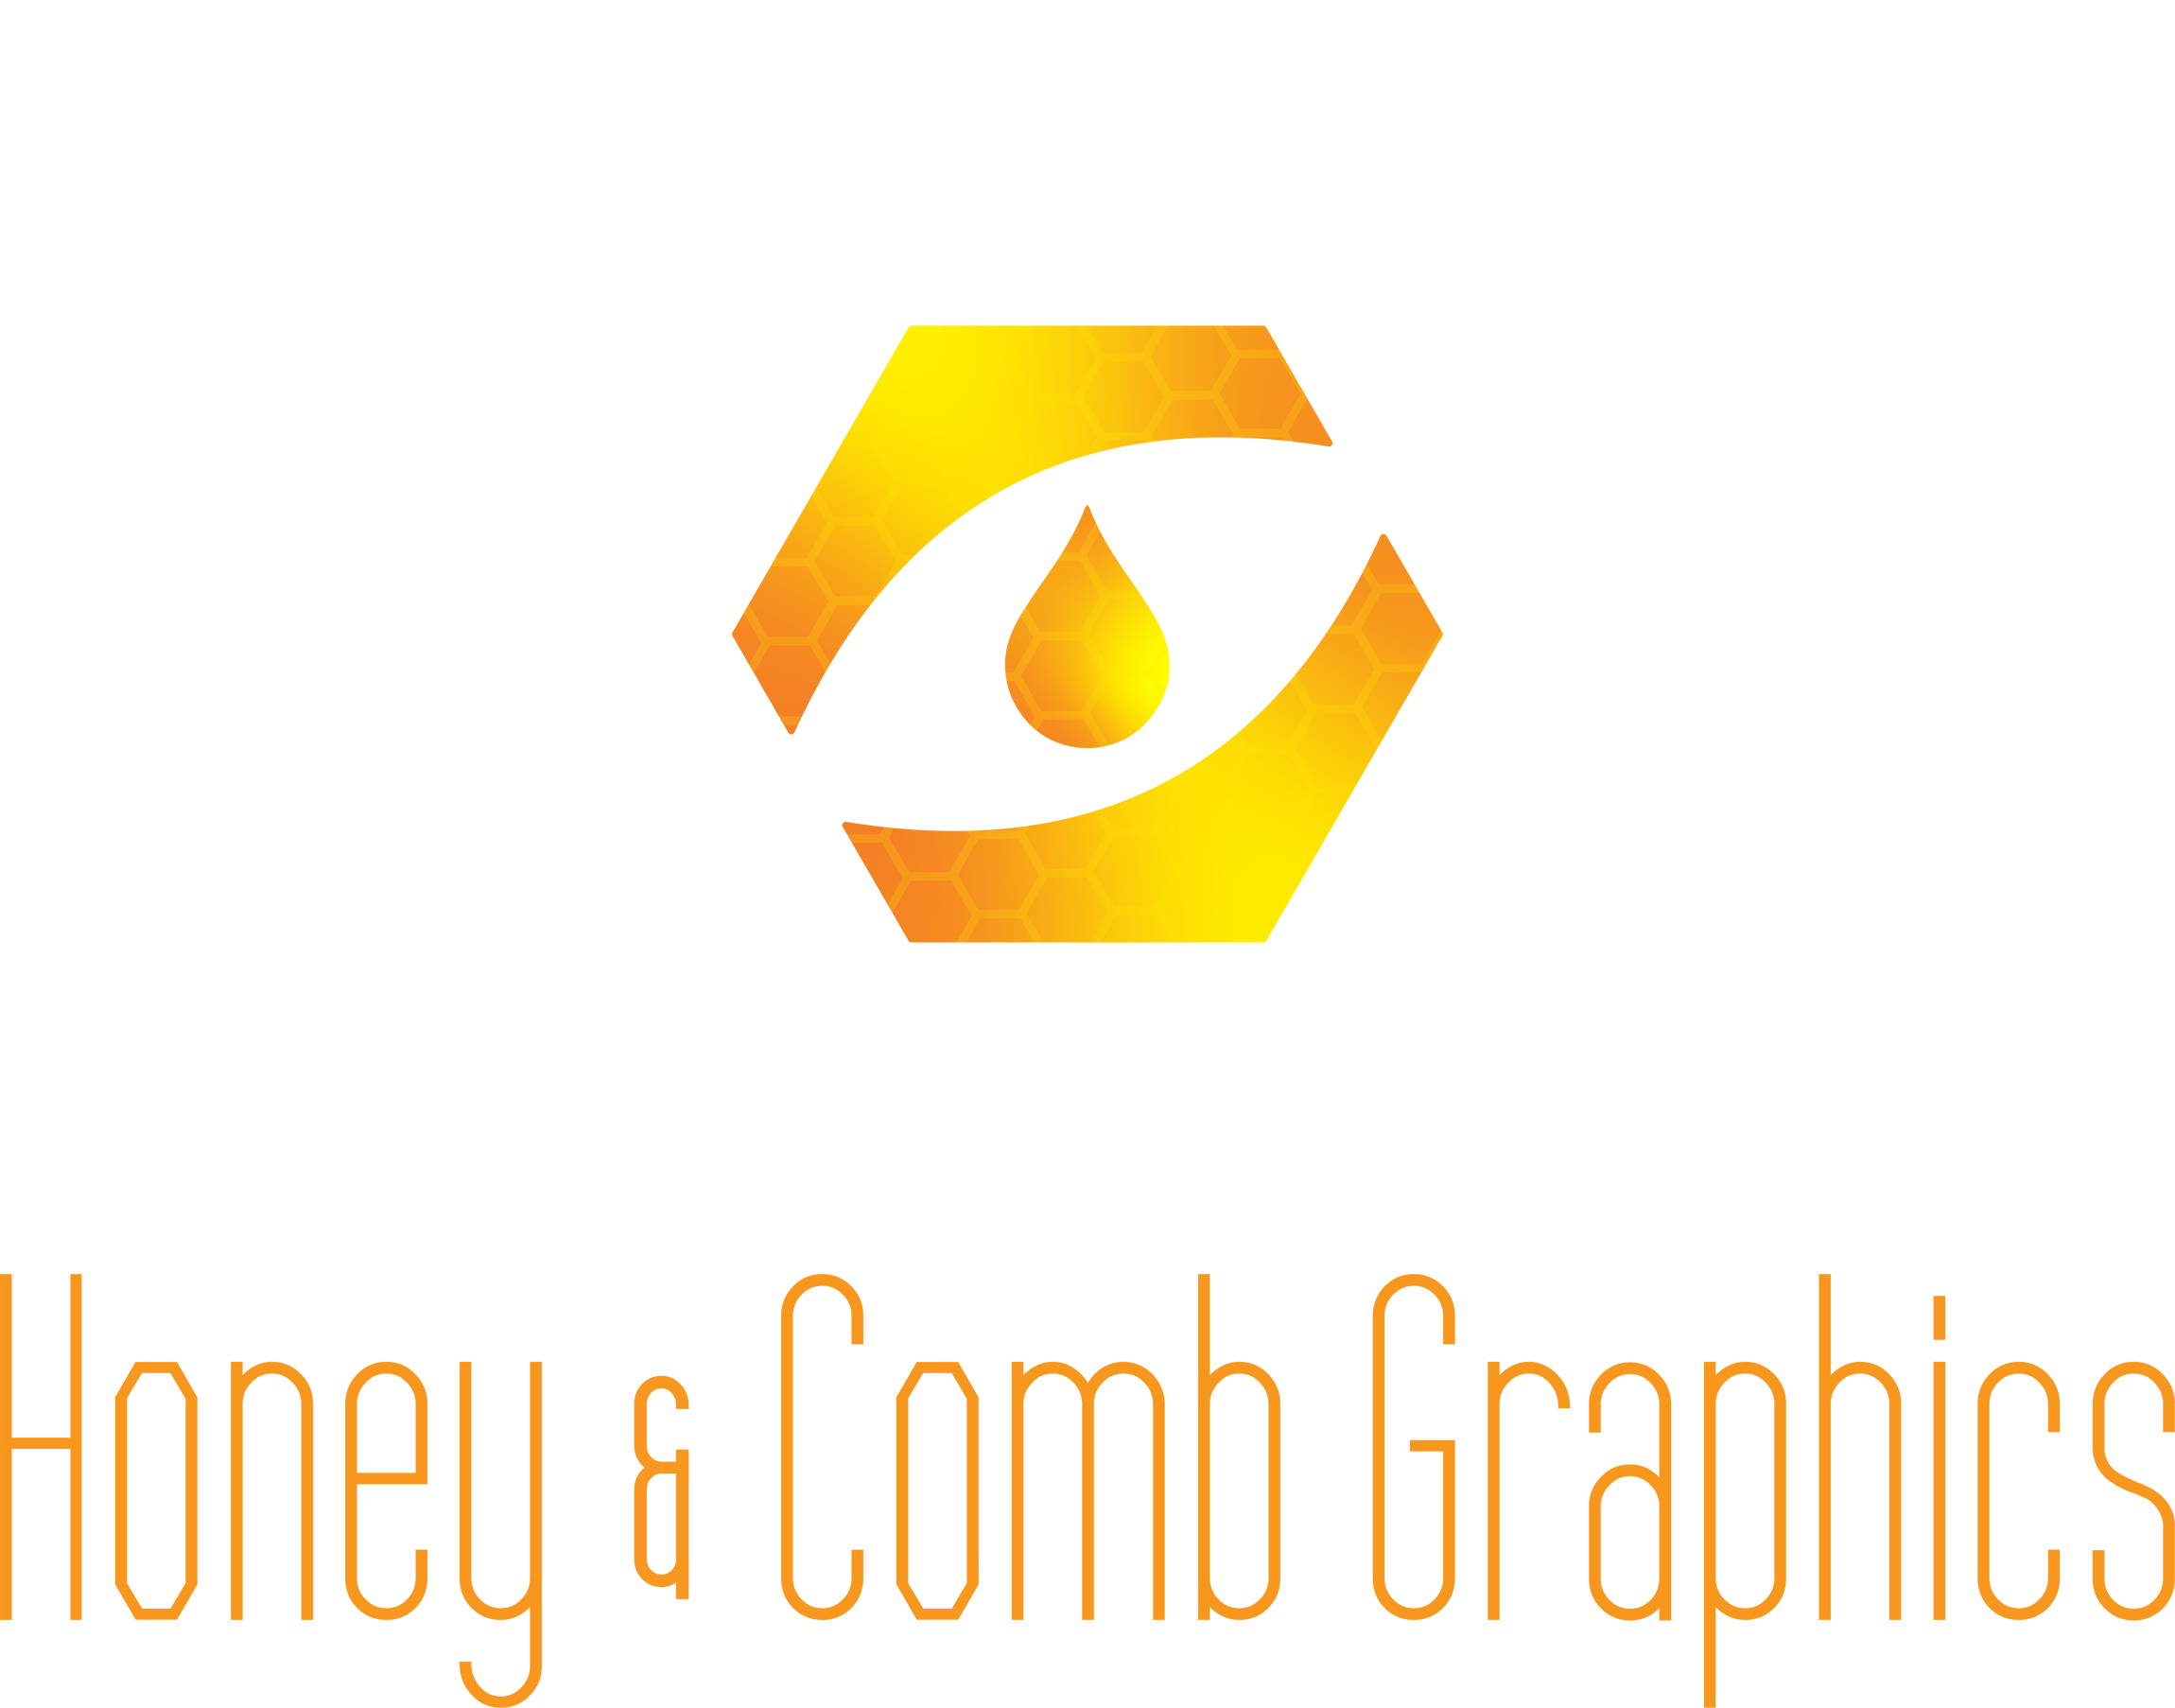 Honey & Comb Graphics